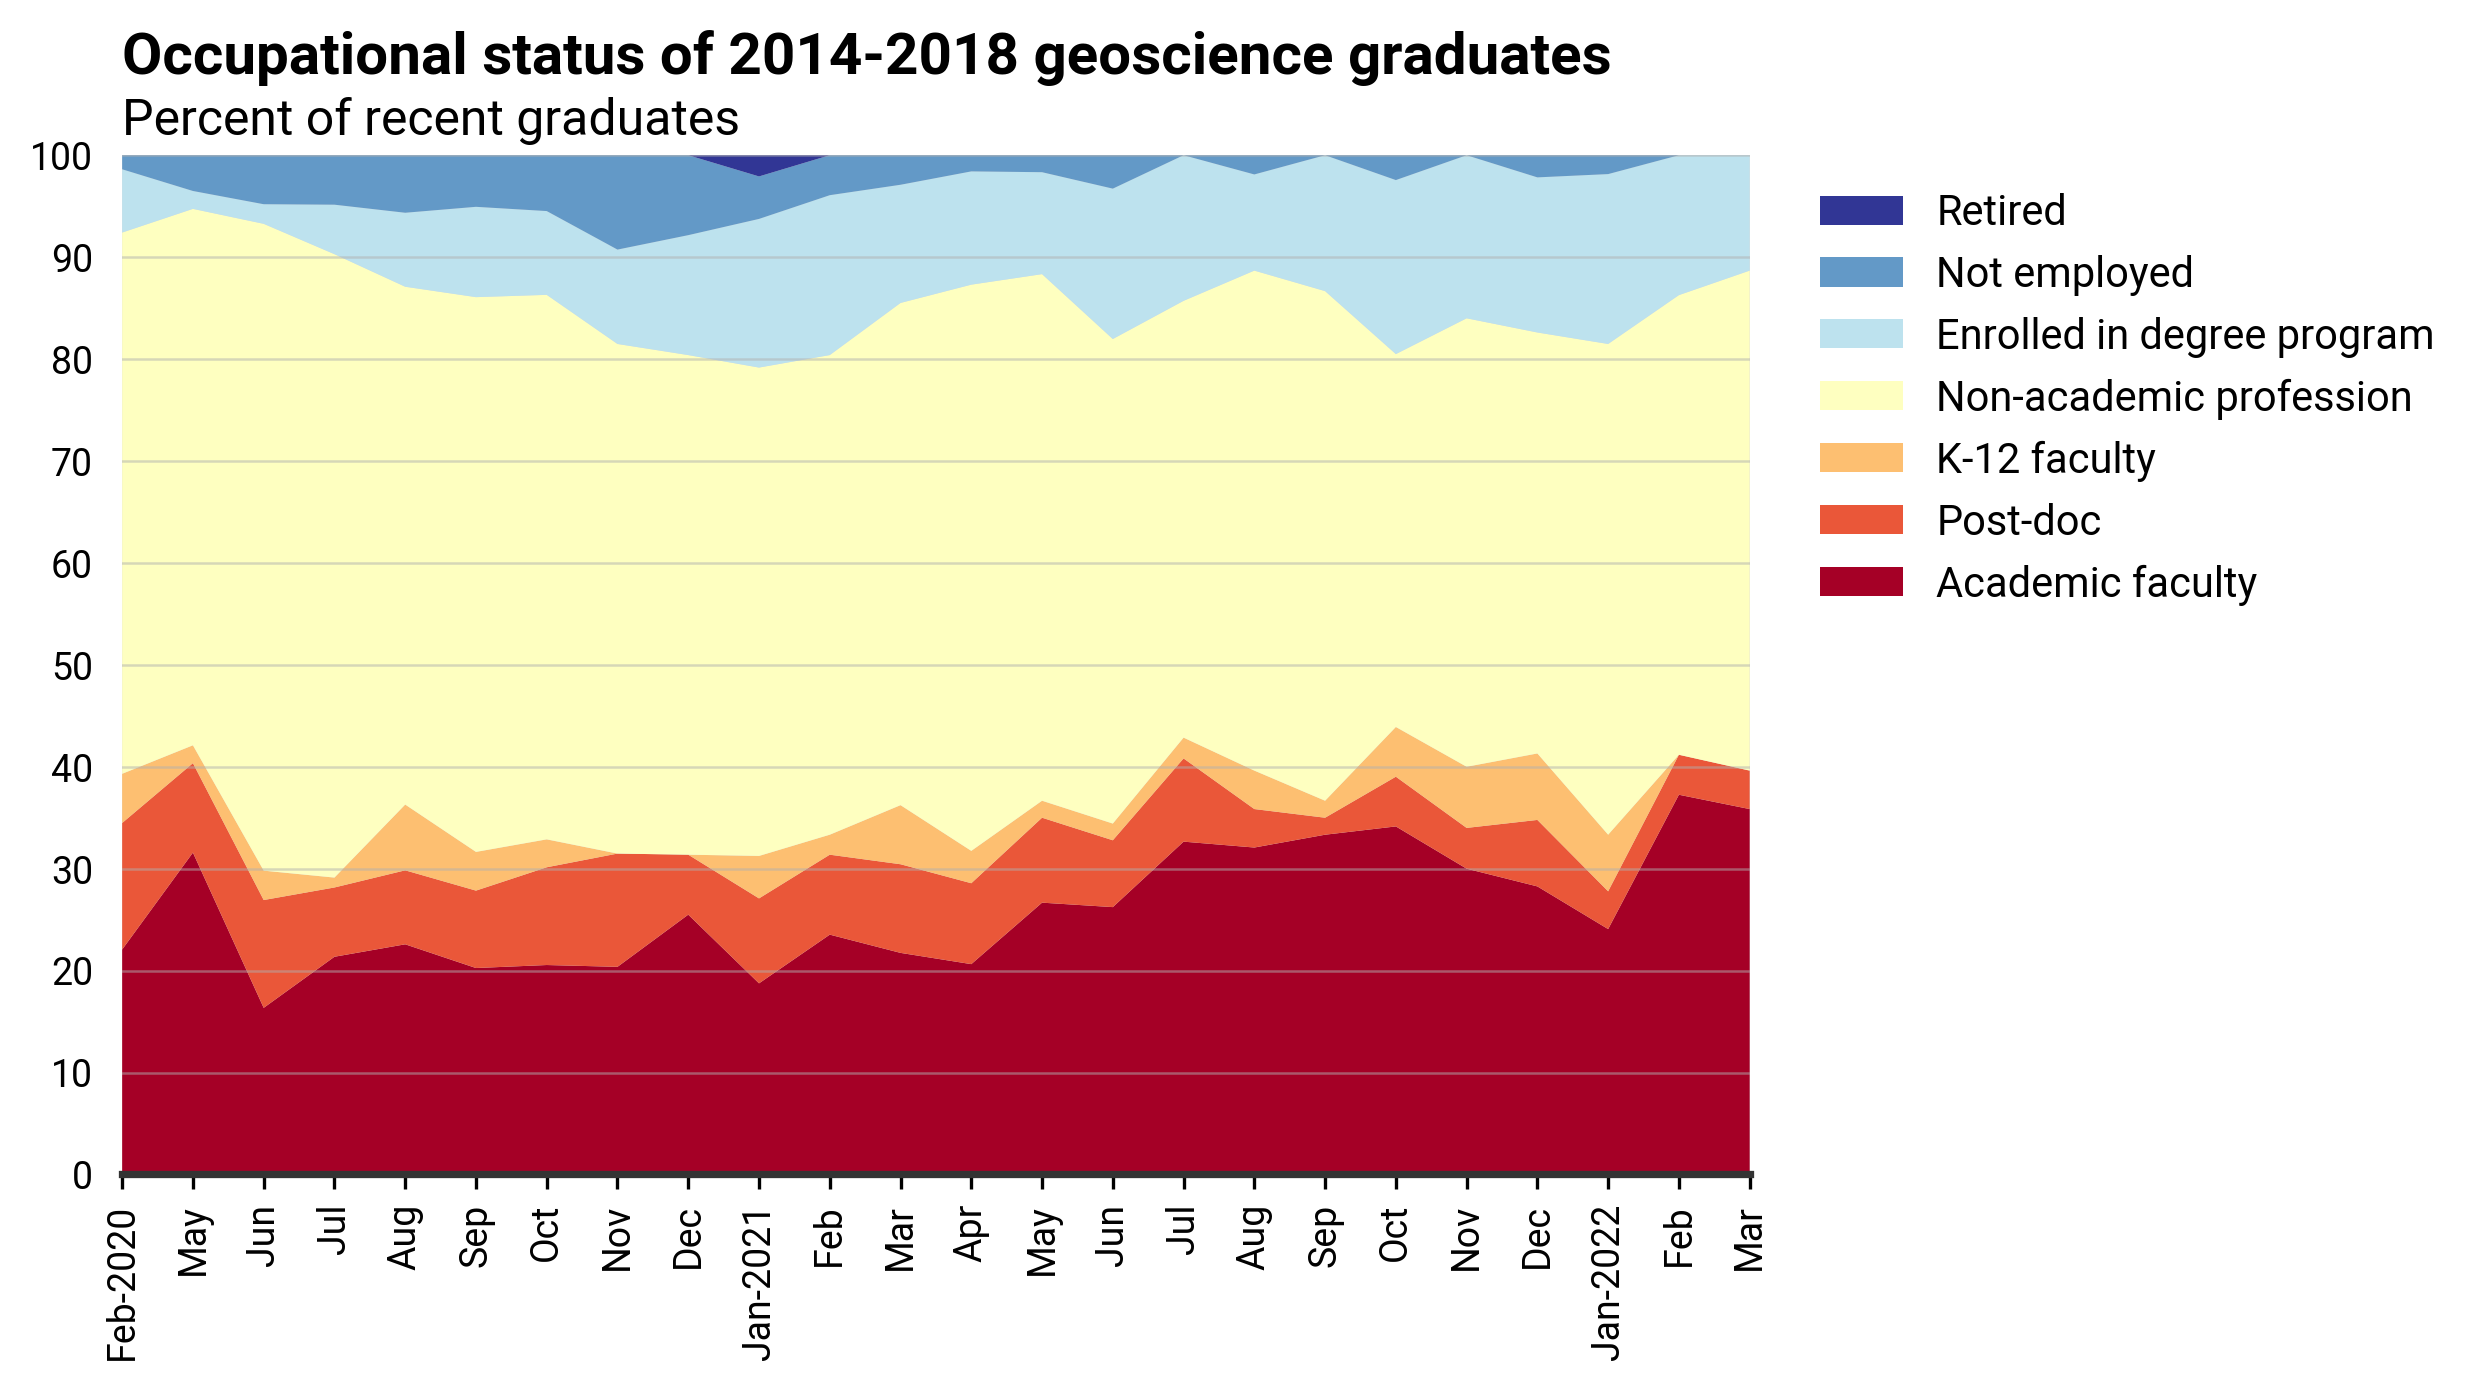 DB_2022-005 chart 02: Occupational status of 2014-2018 geoscience graduates (Credit: AGI; data from AGI's Geoscience COVID-19 Survey)